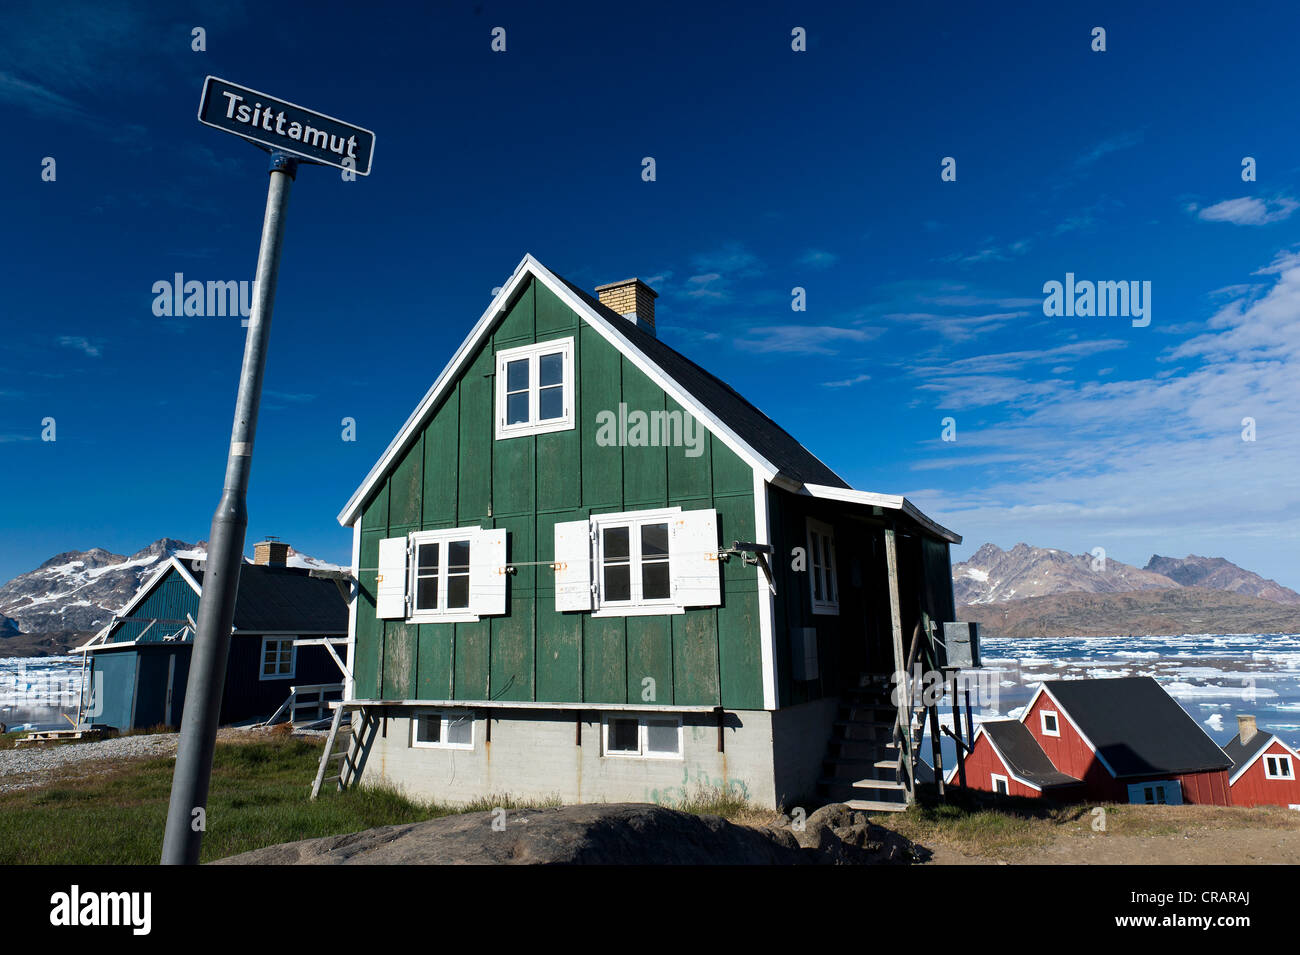 Road sign and green house in Greenland, Tasiilaq or Ammassalik, East Greenland, Greenland Stock Photo